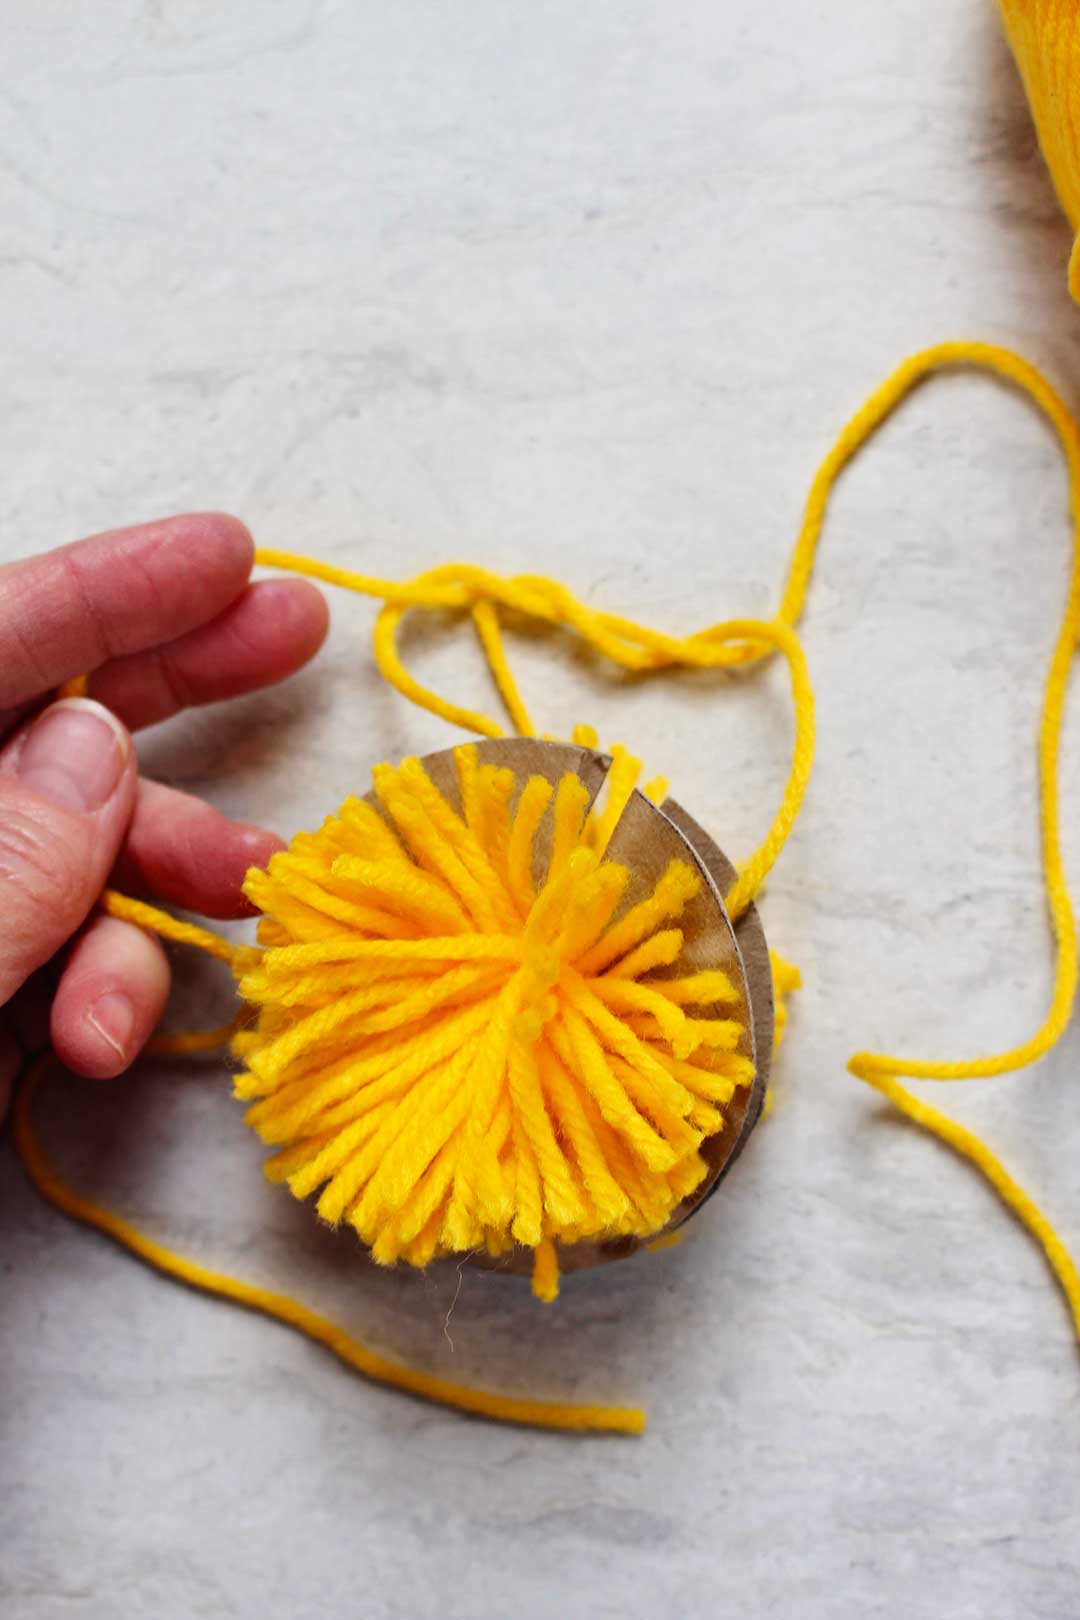 Yellow yarn cut into a pom pom shape.